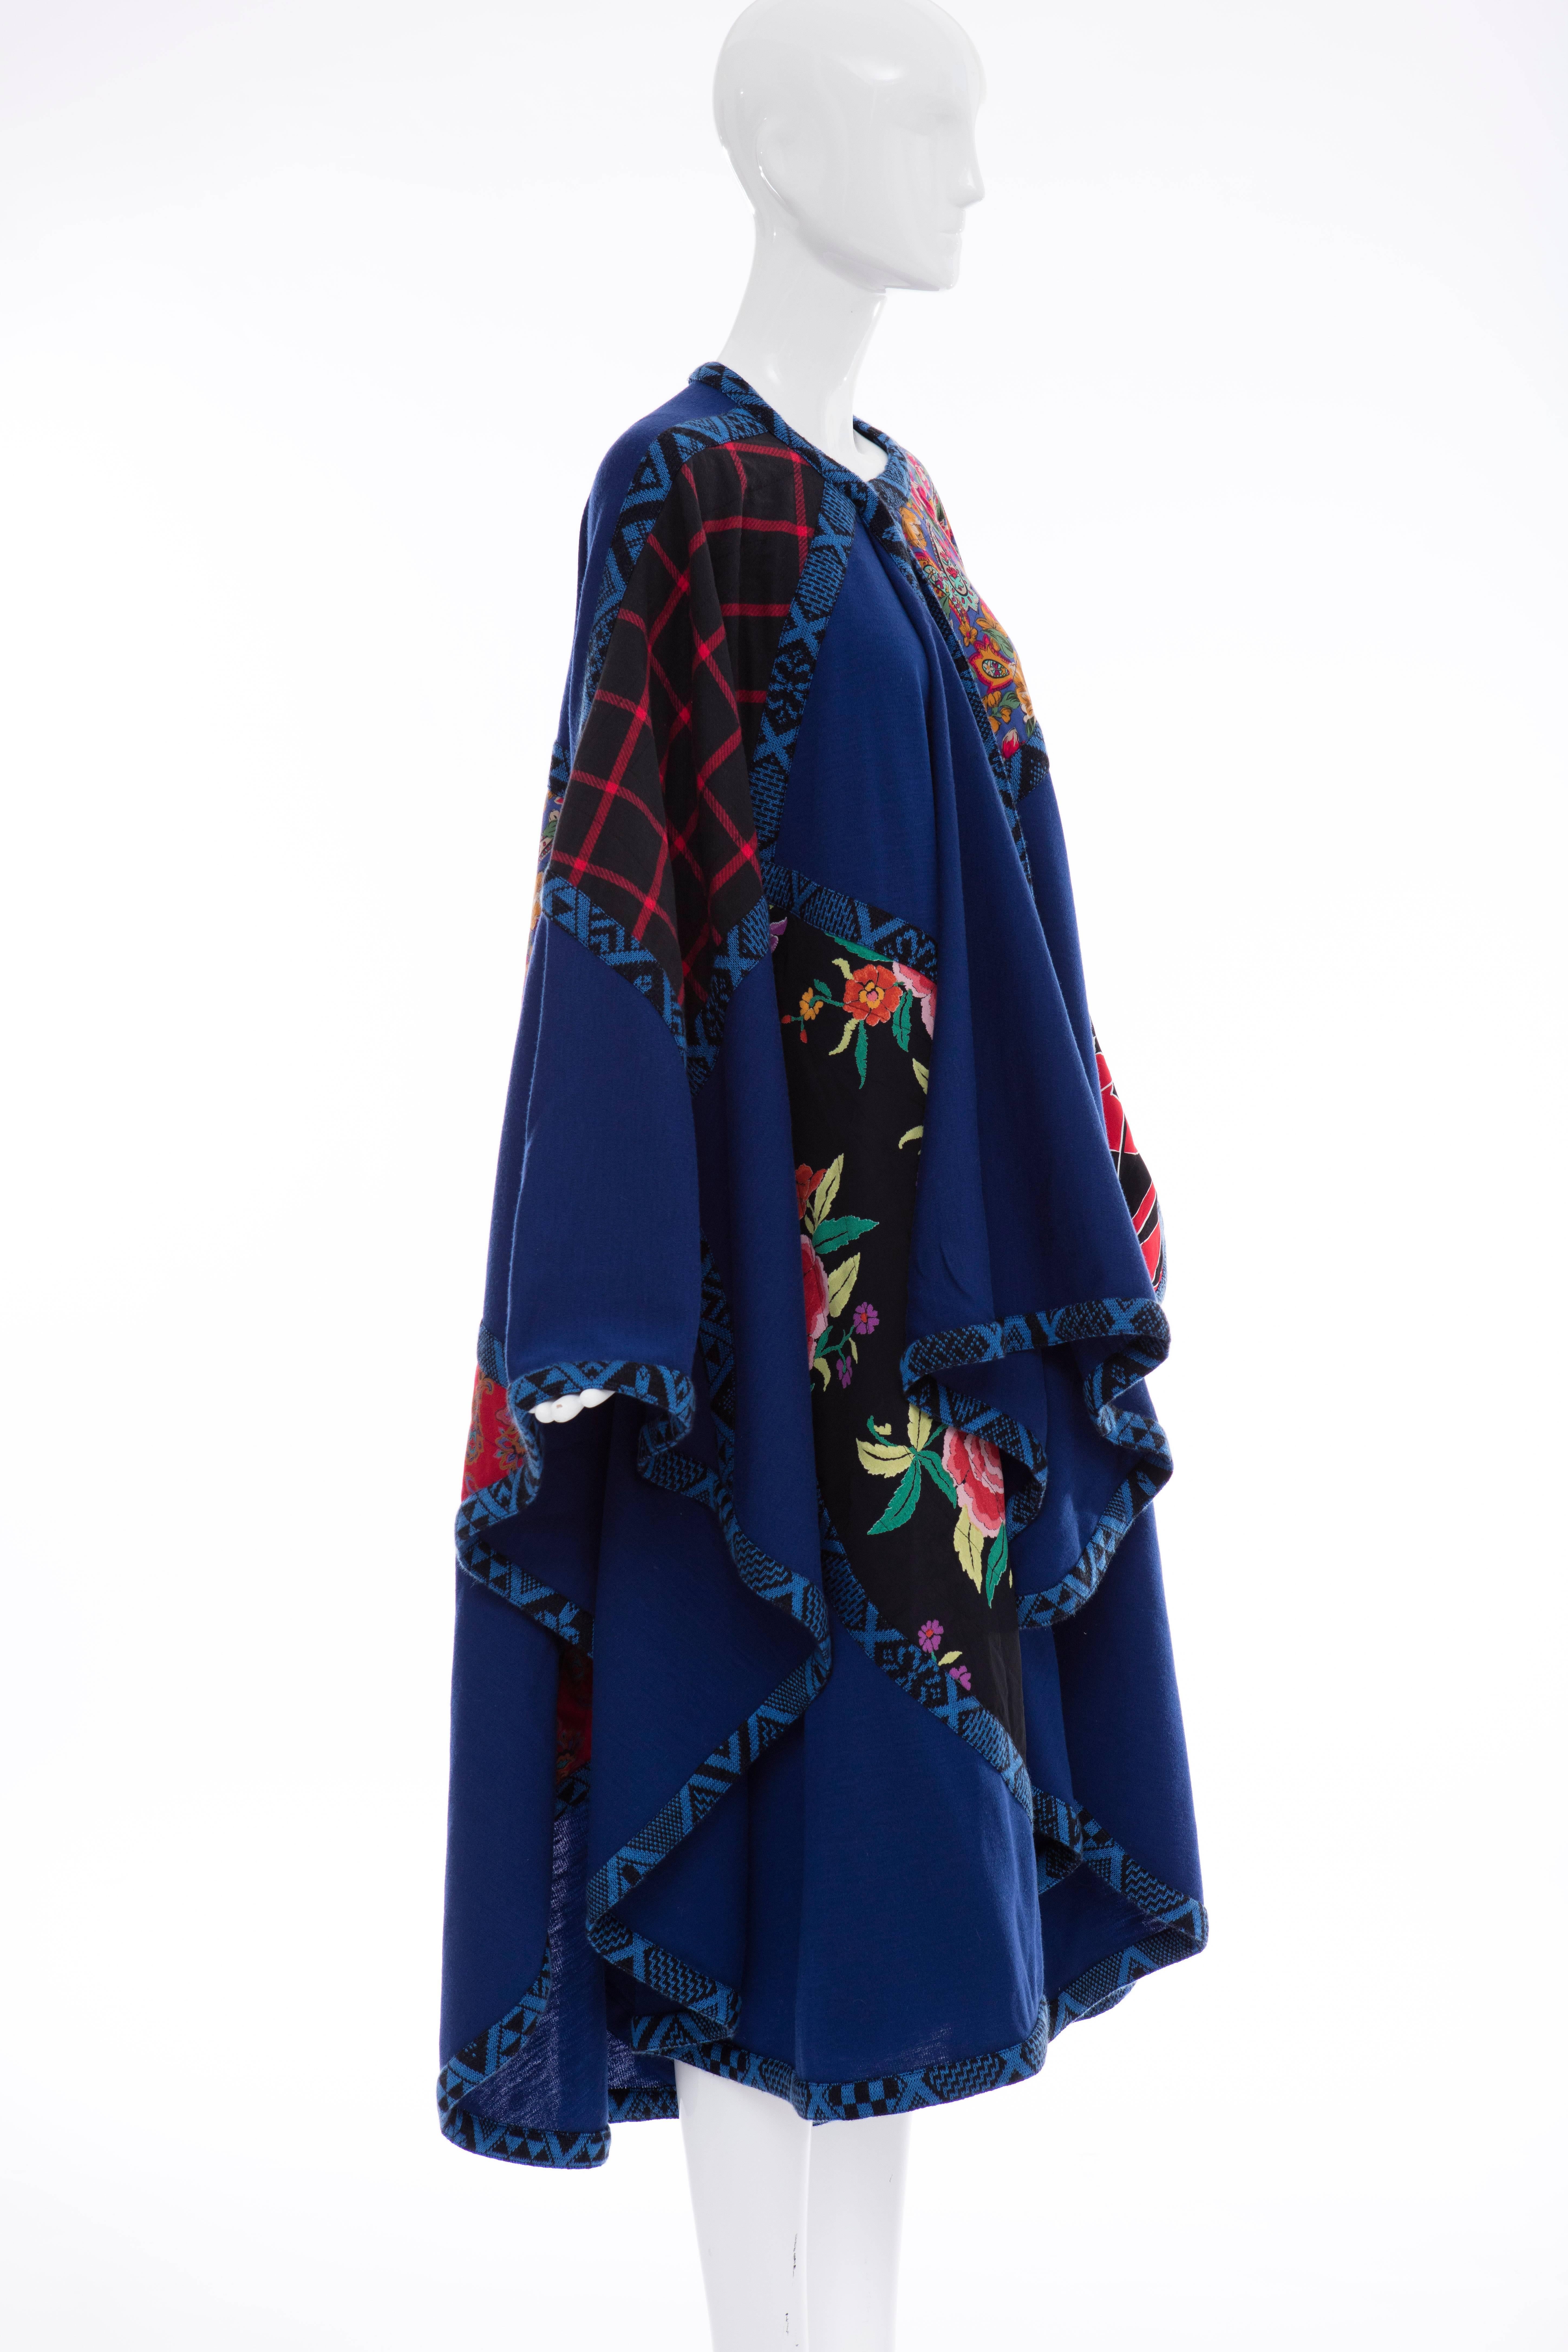 Women's Koos Van Den Akker Royal Blue Cloak With Floral Quilted Patchwork, Circa 1980's